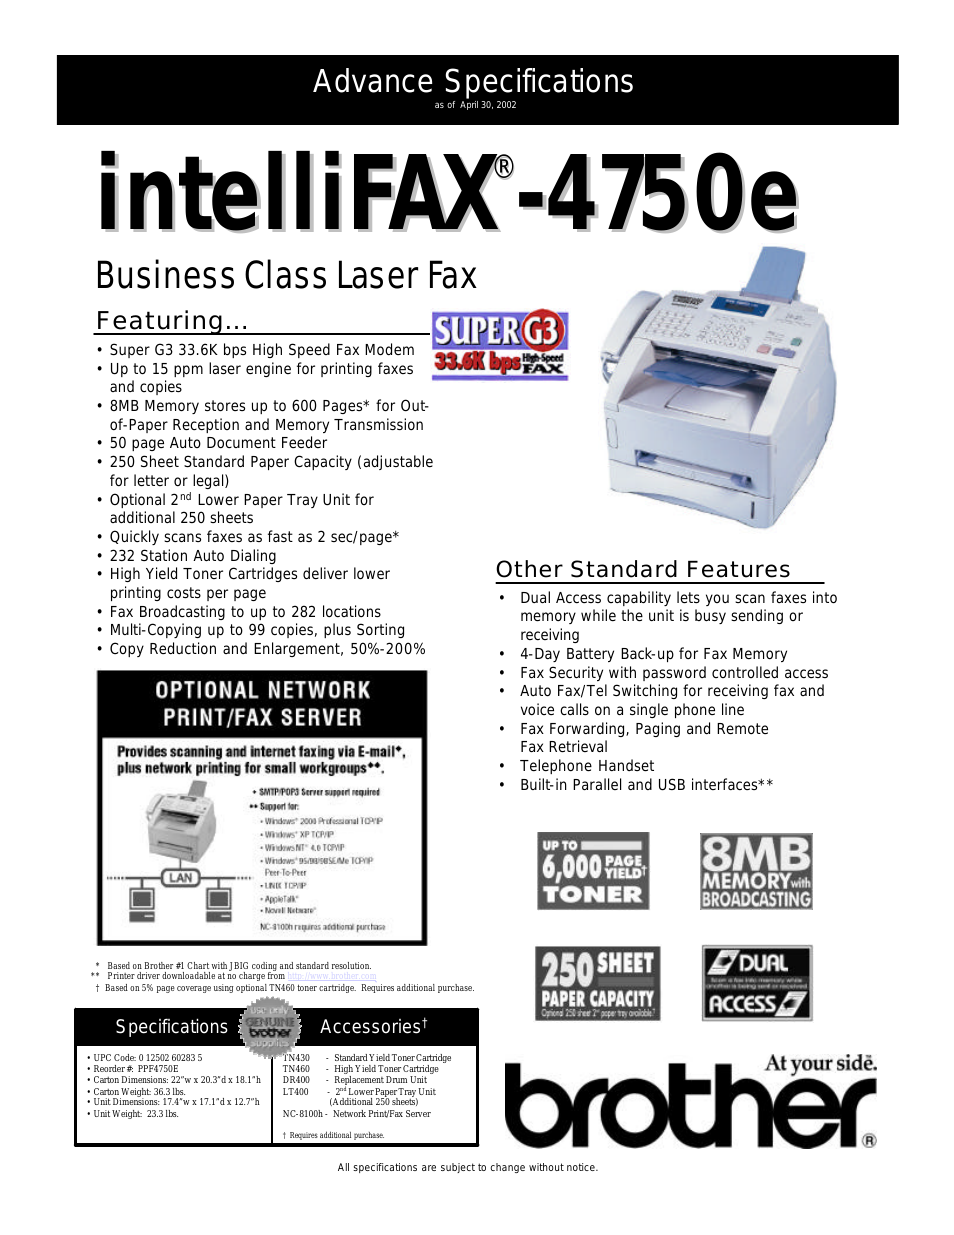 IntelliFAX 4750e